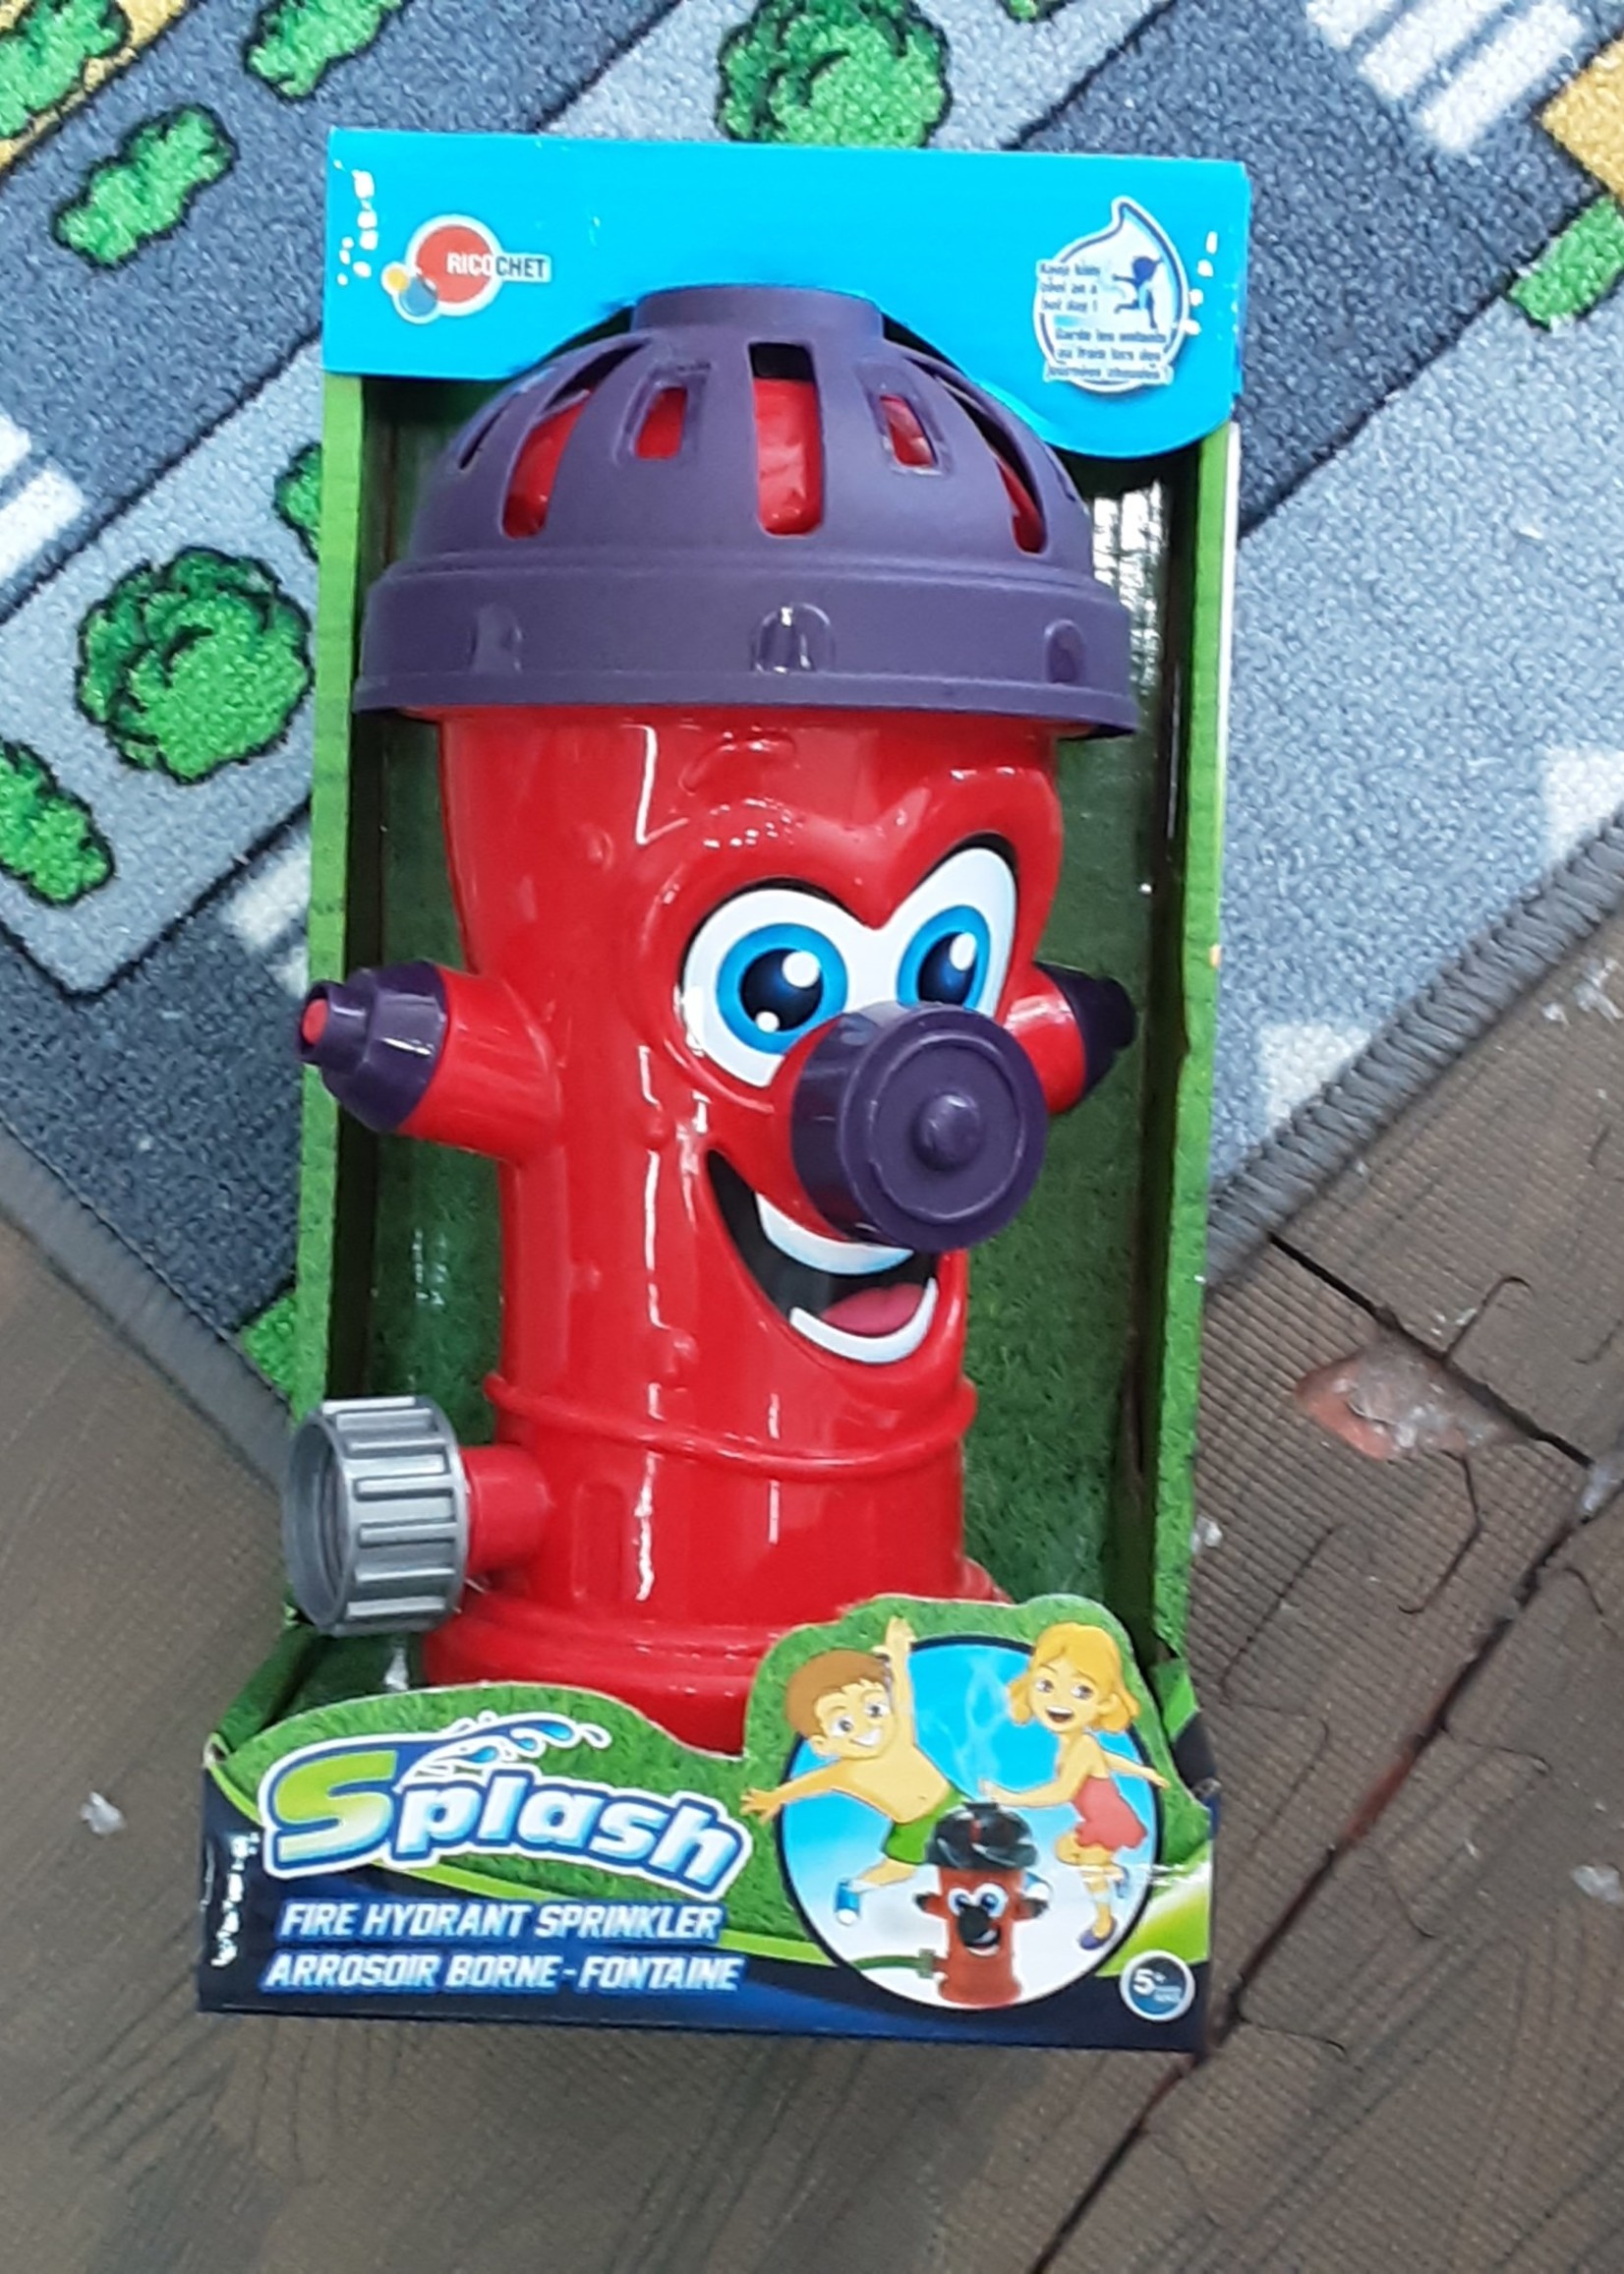 Ricochet Splash - Fire hydrant